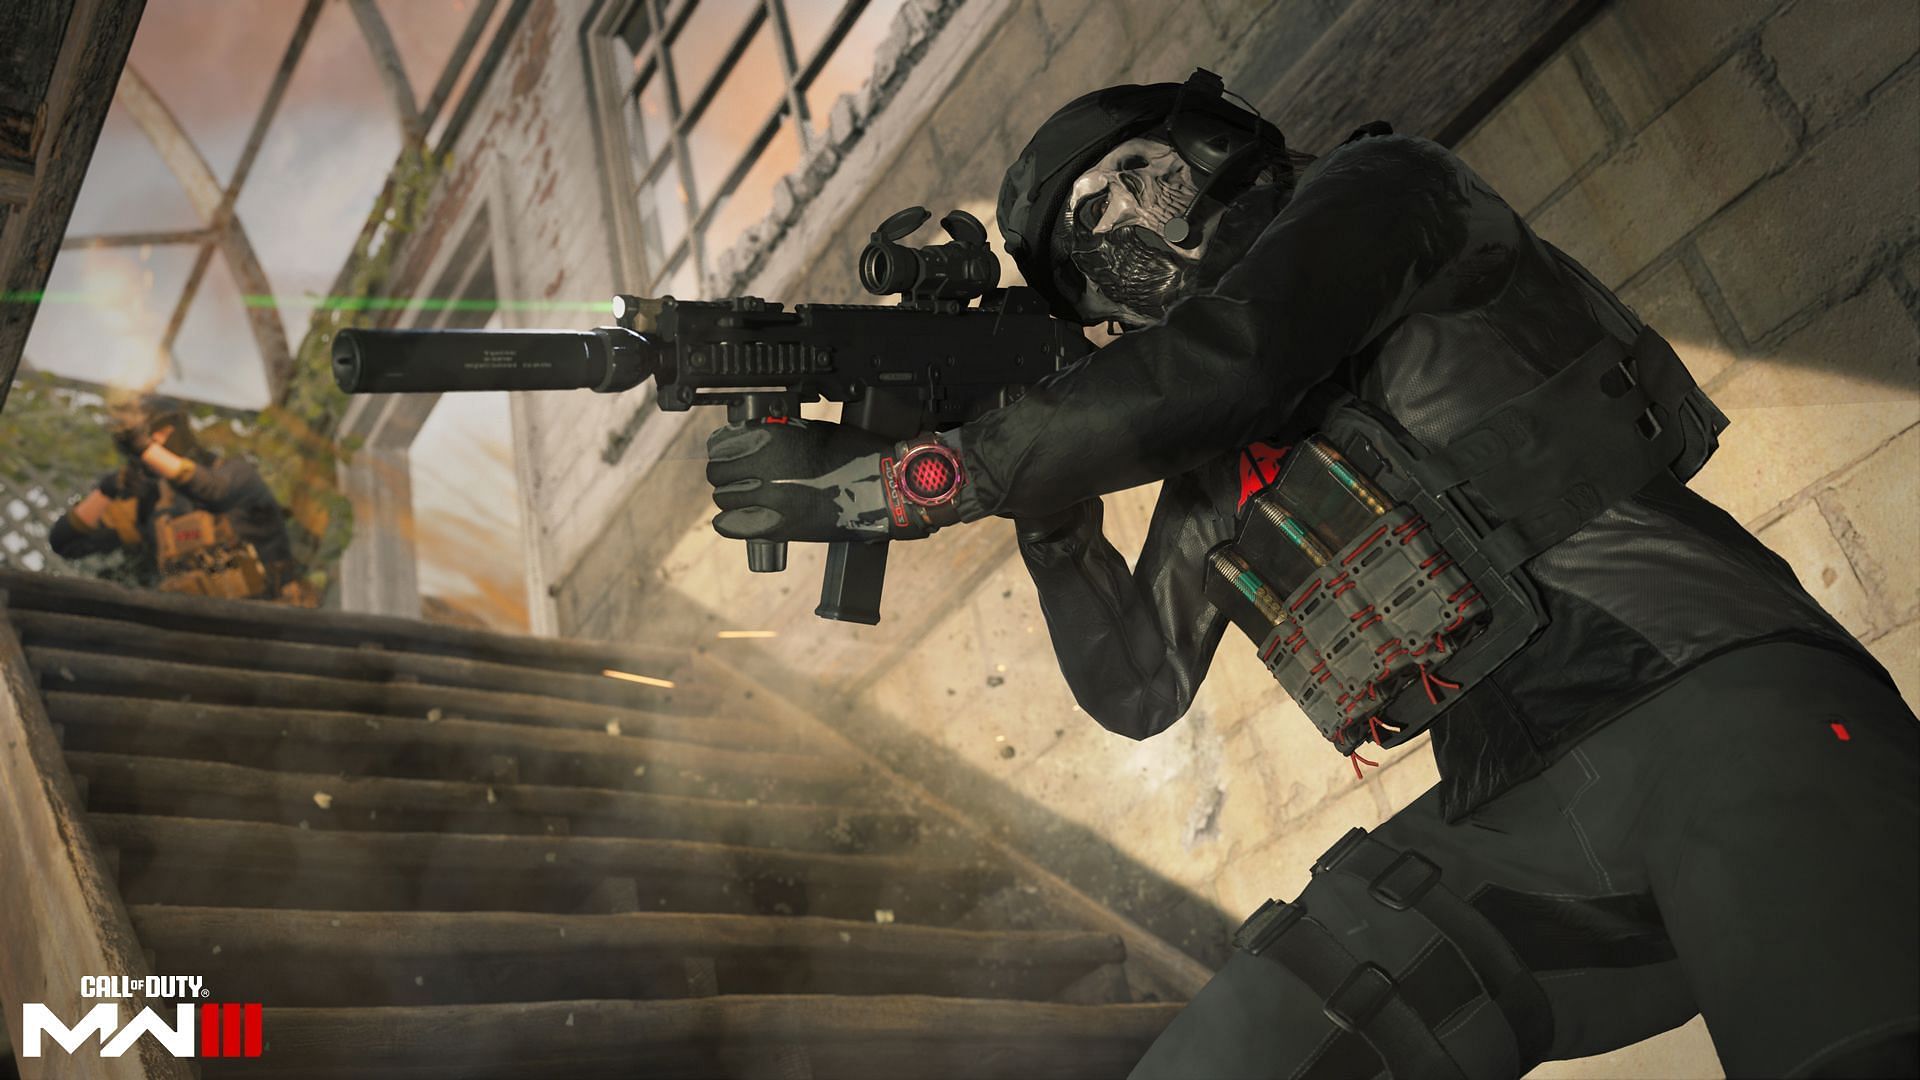 Call Of Duty: Modern Warfare 3 multiplayer review: a tiring nostalgia trip